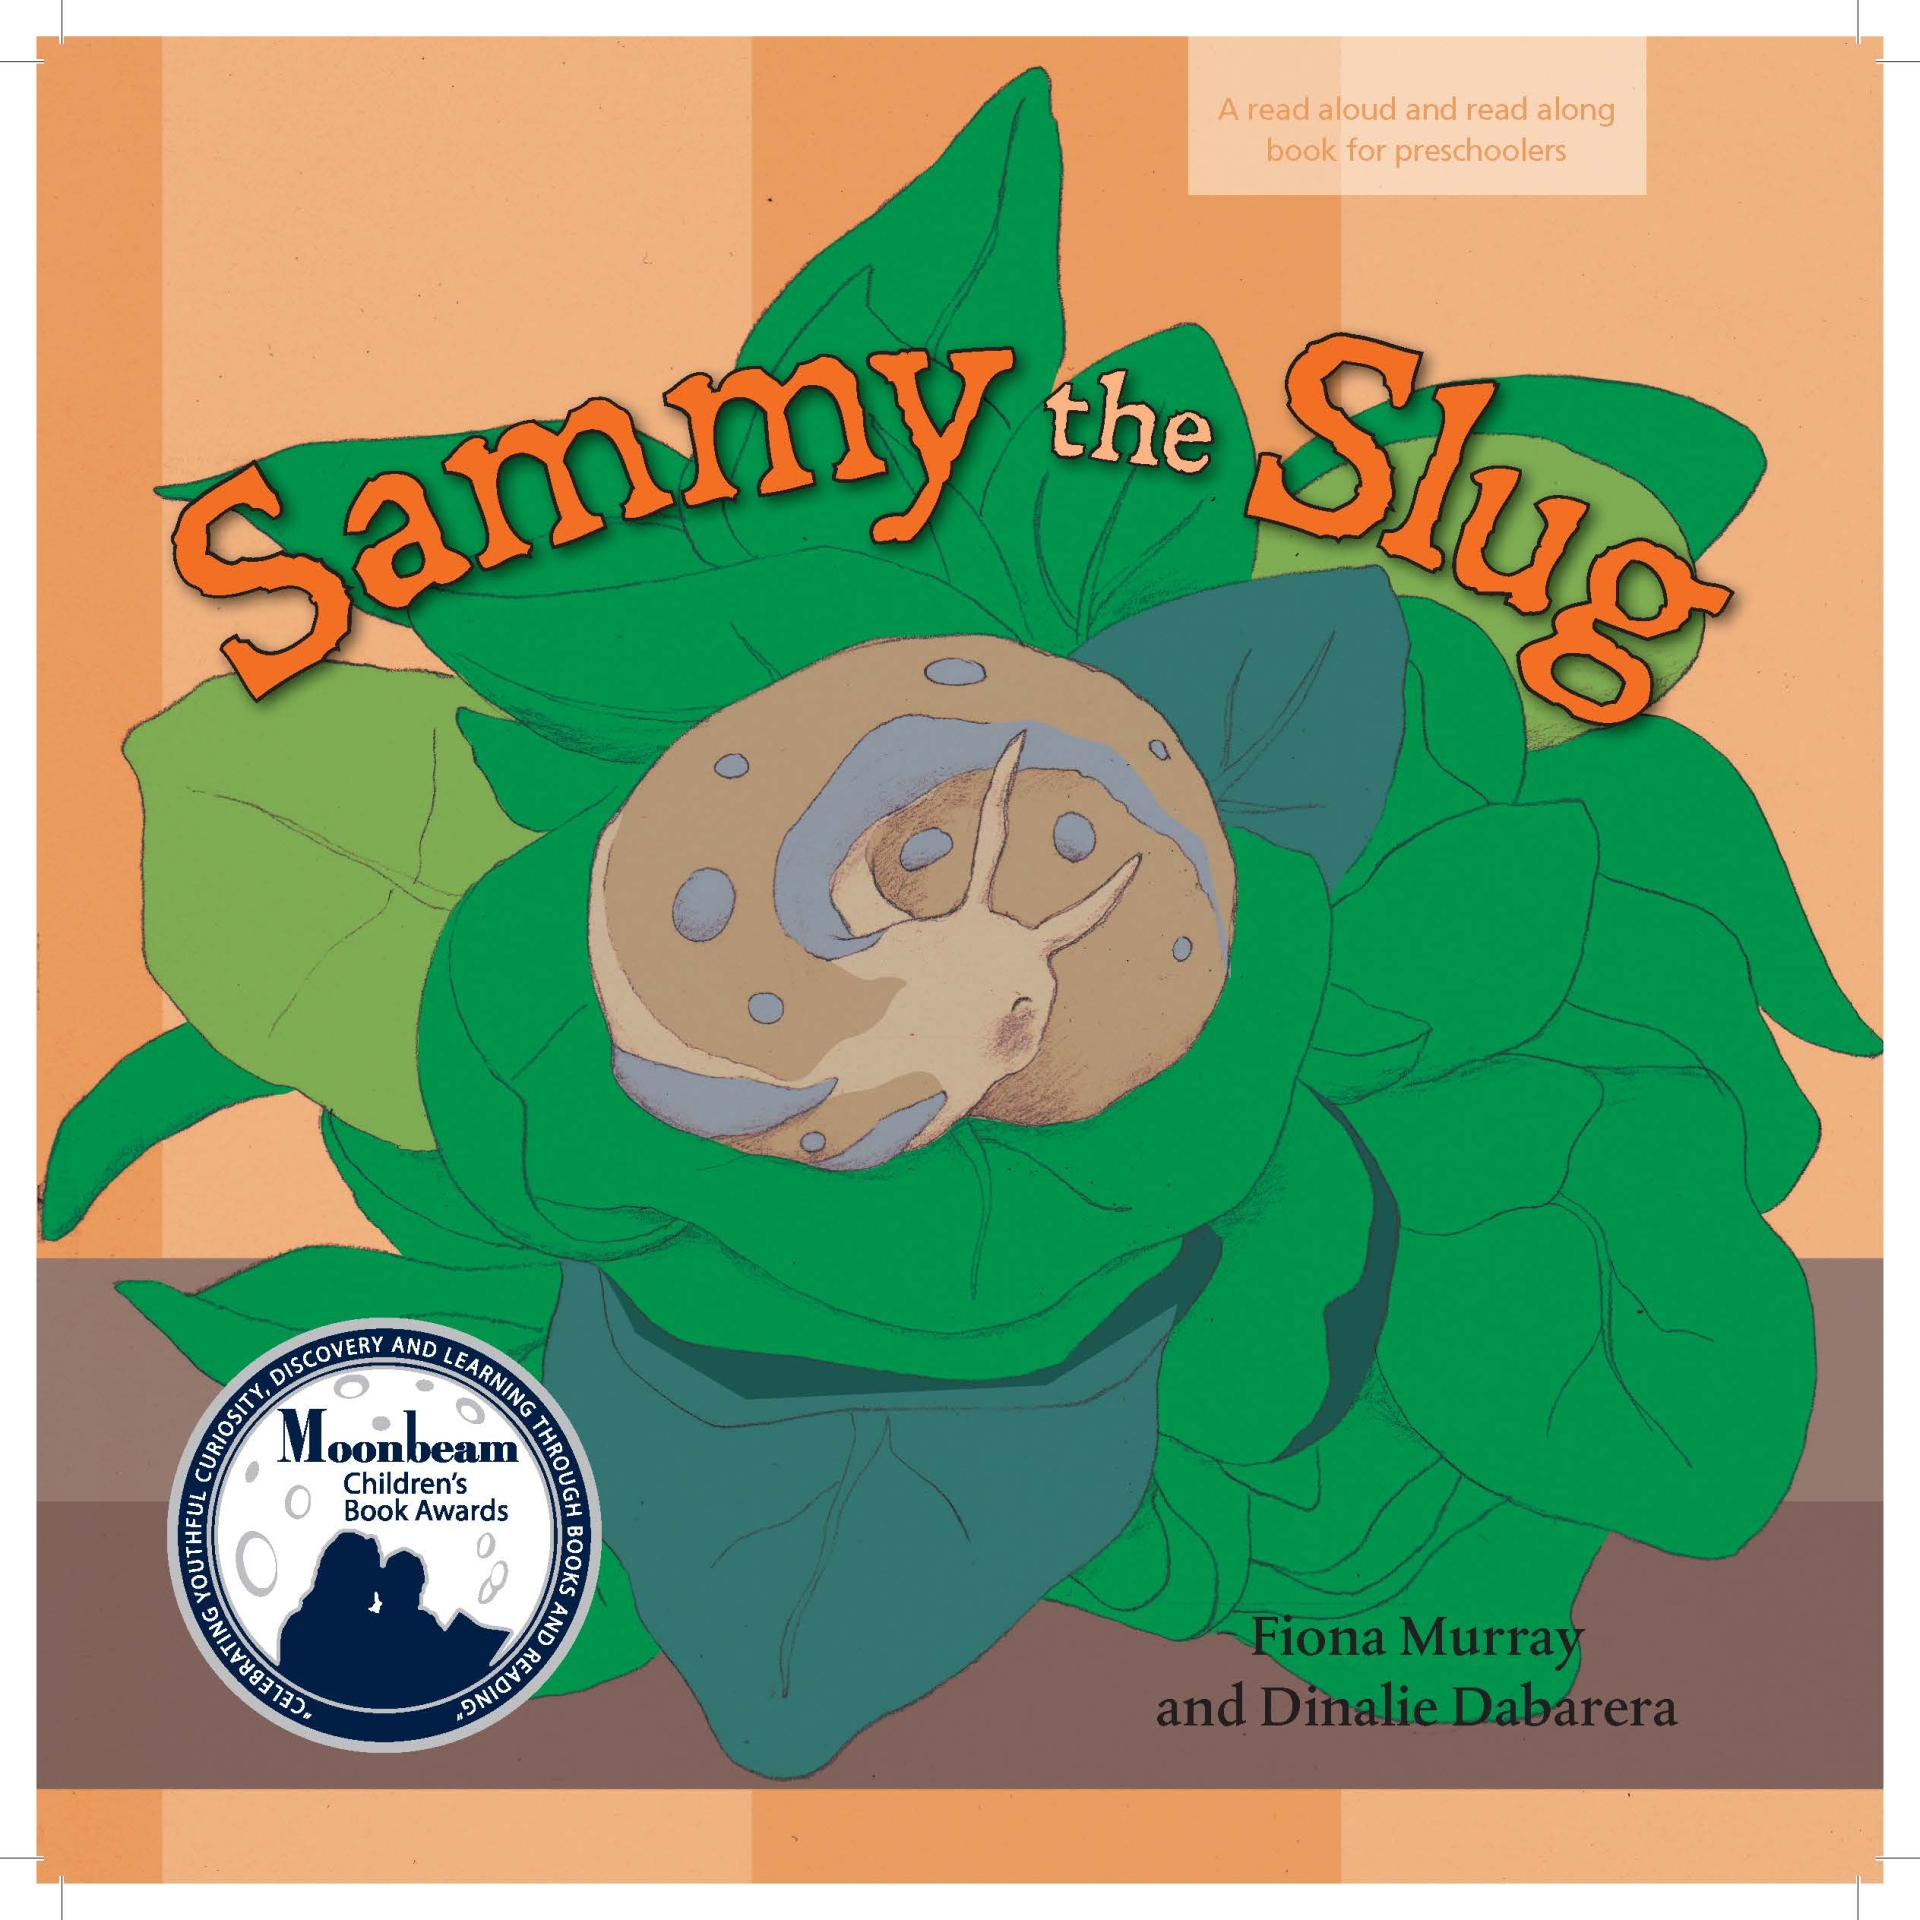 Sammy the Slug